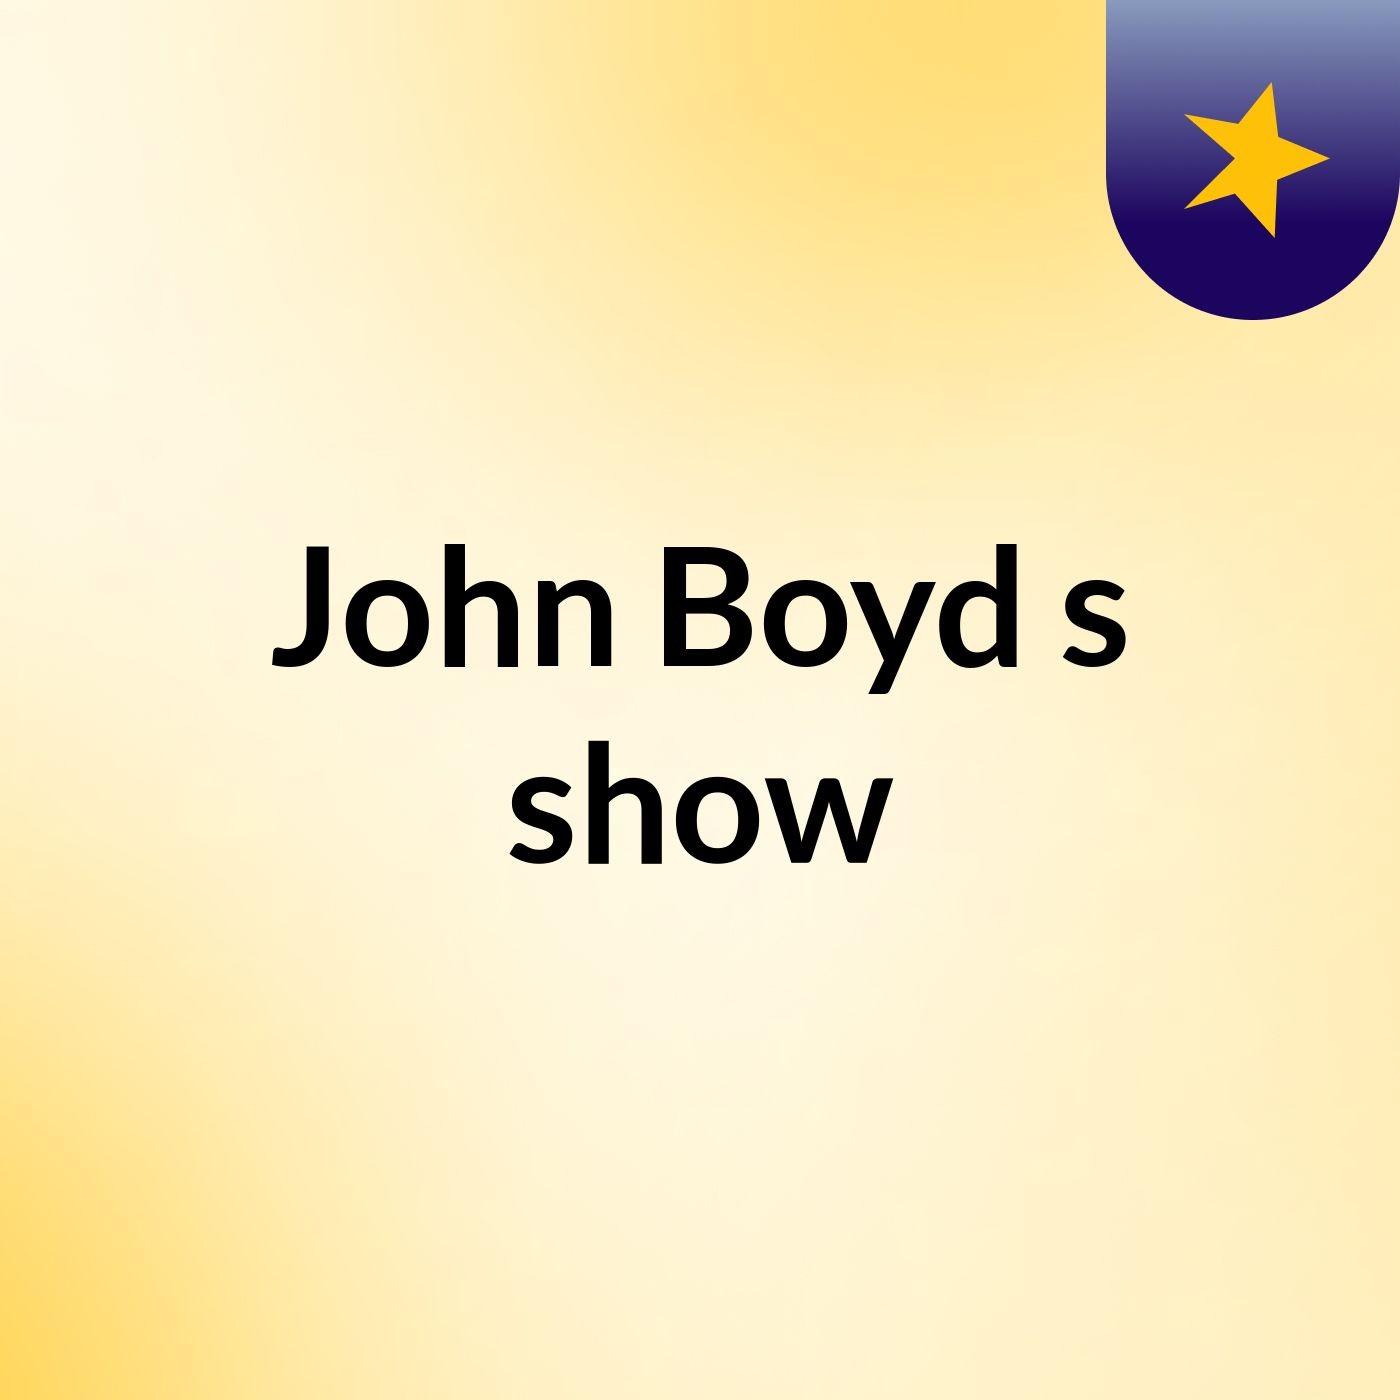 John Boyd's show